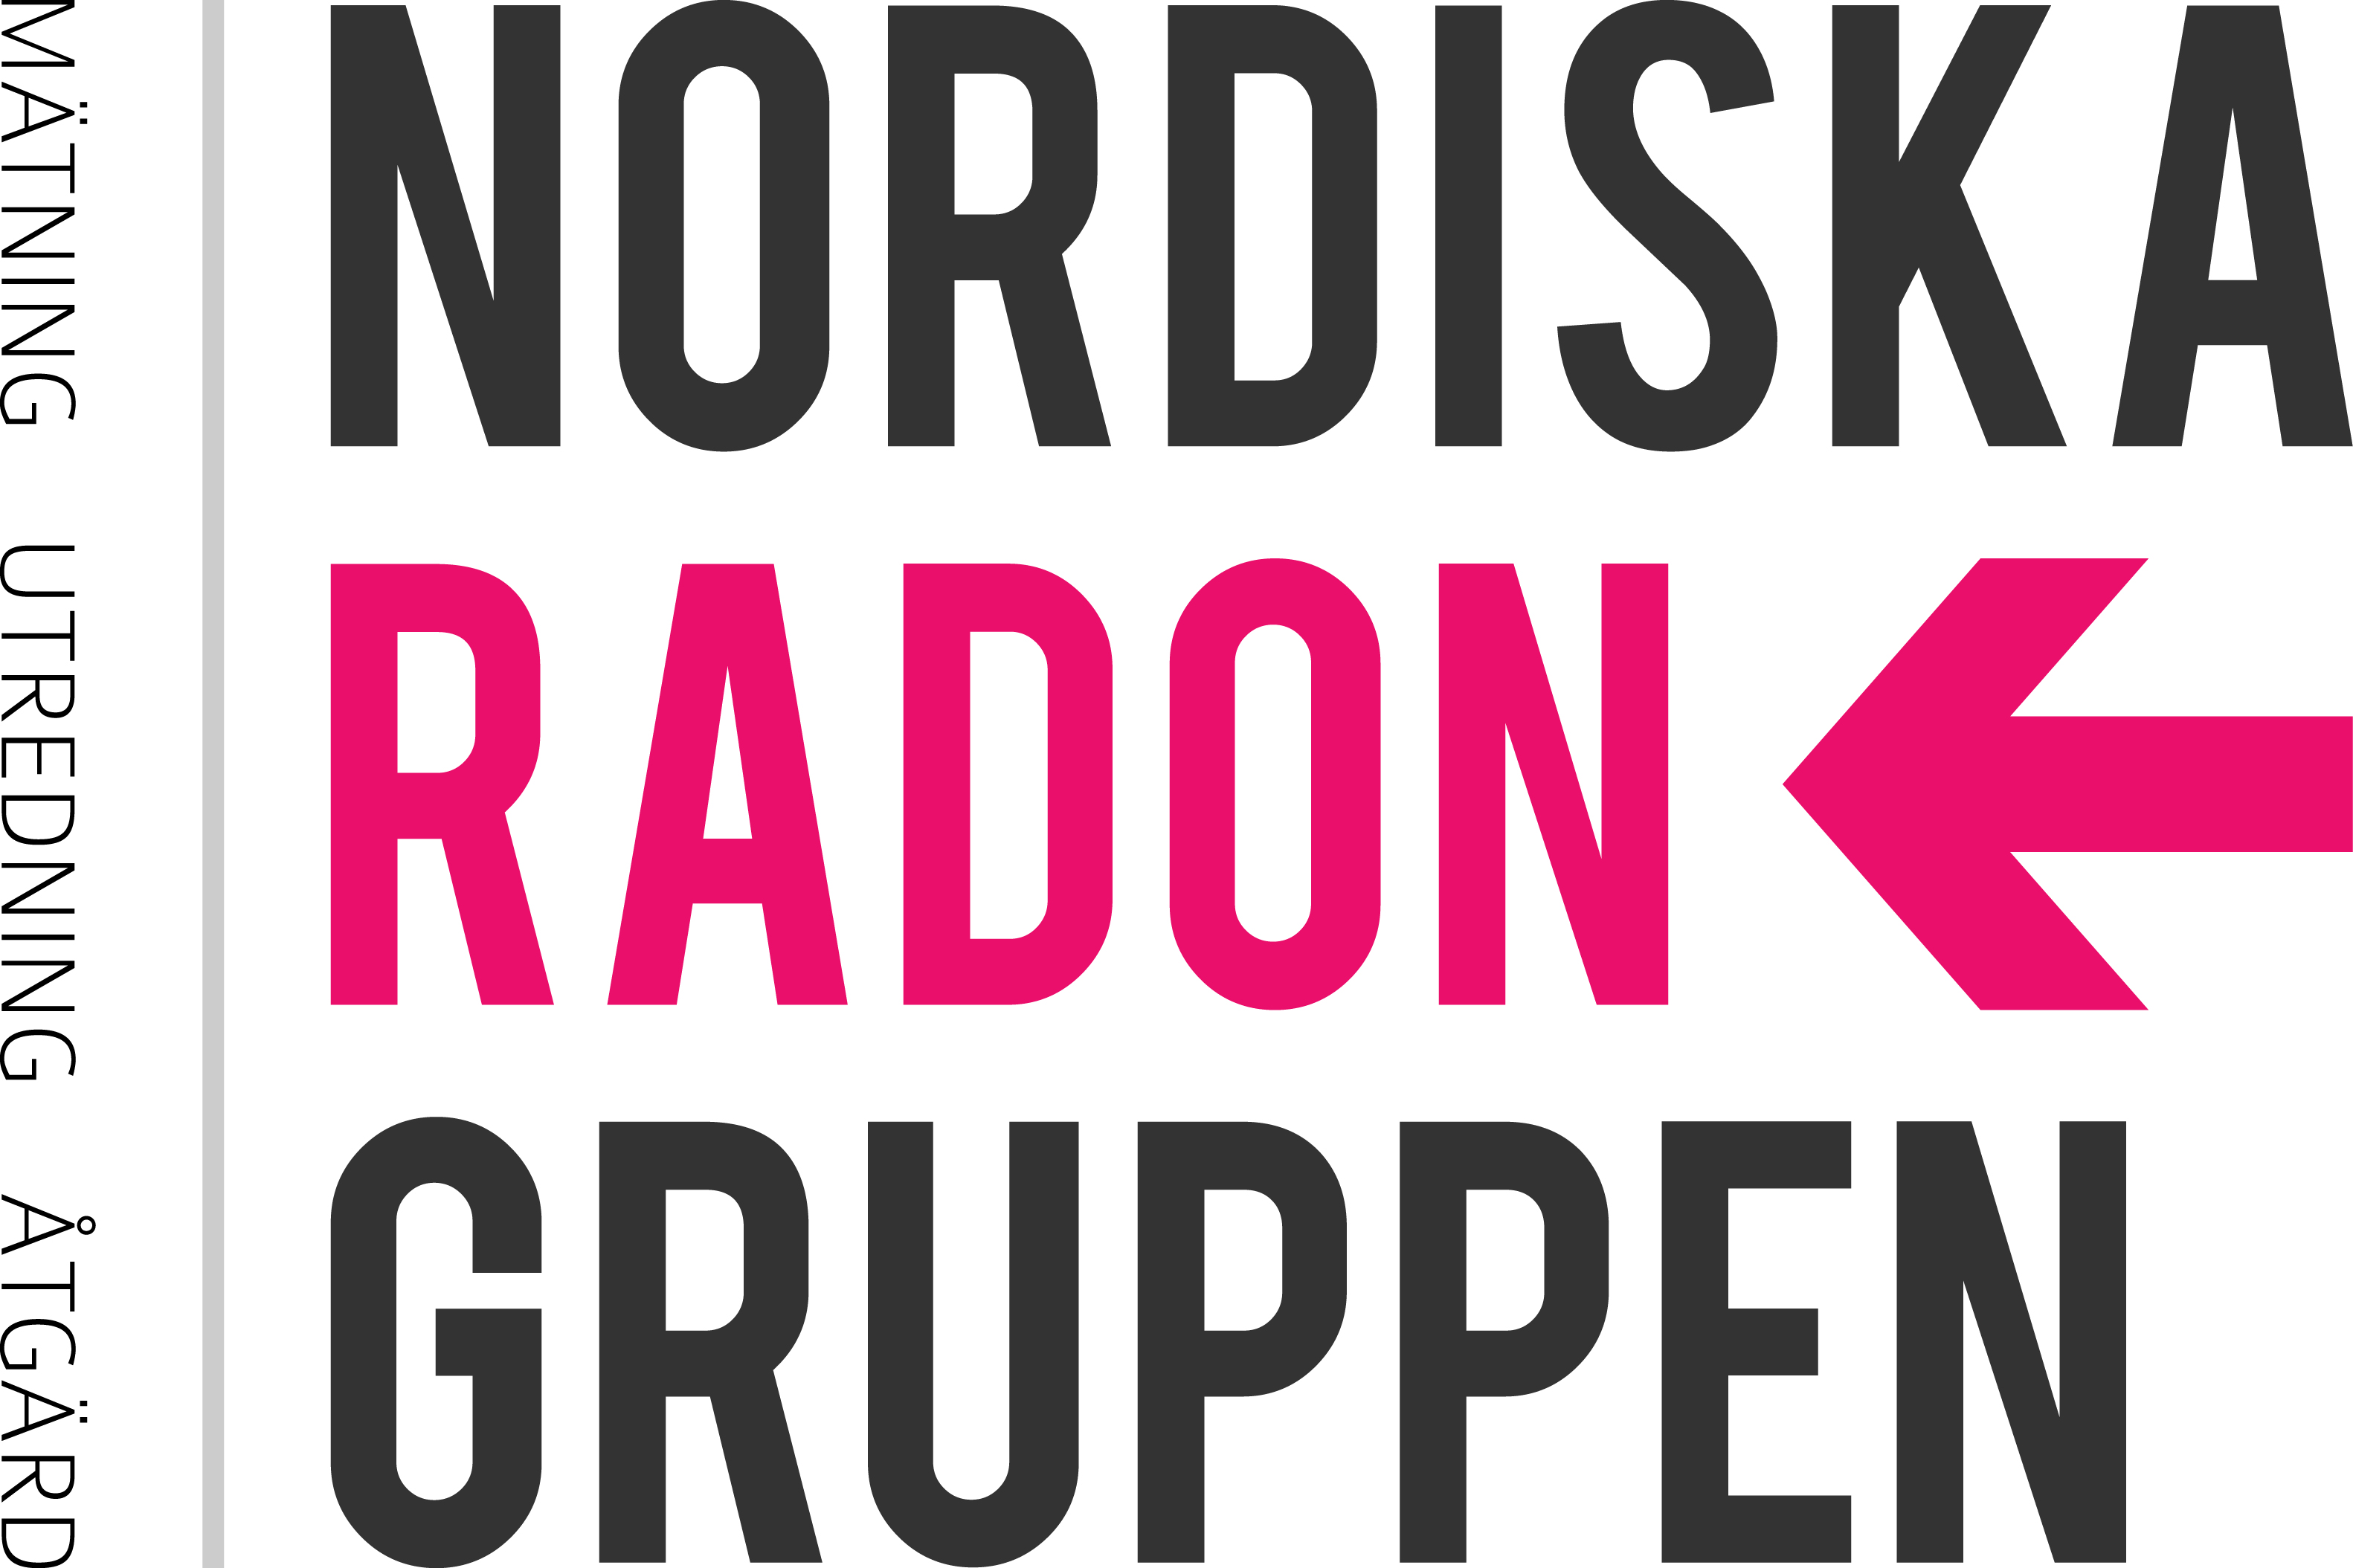 Nordiska radongruppen